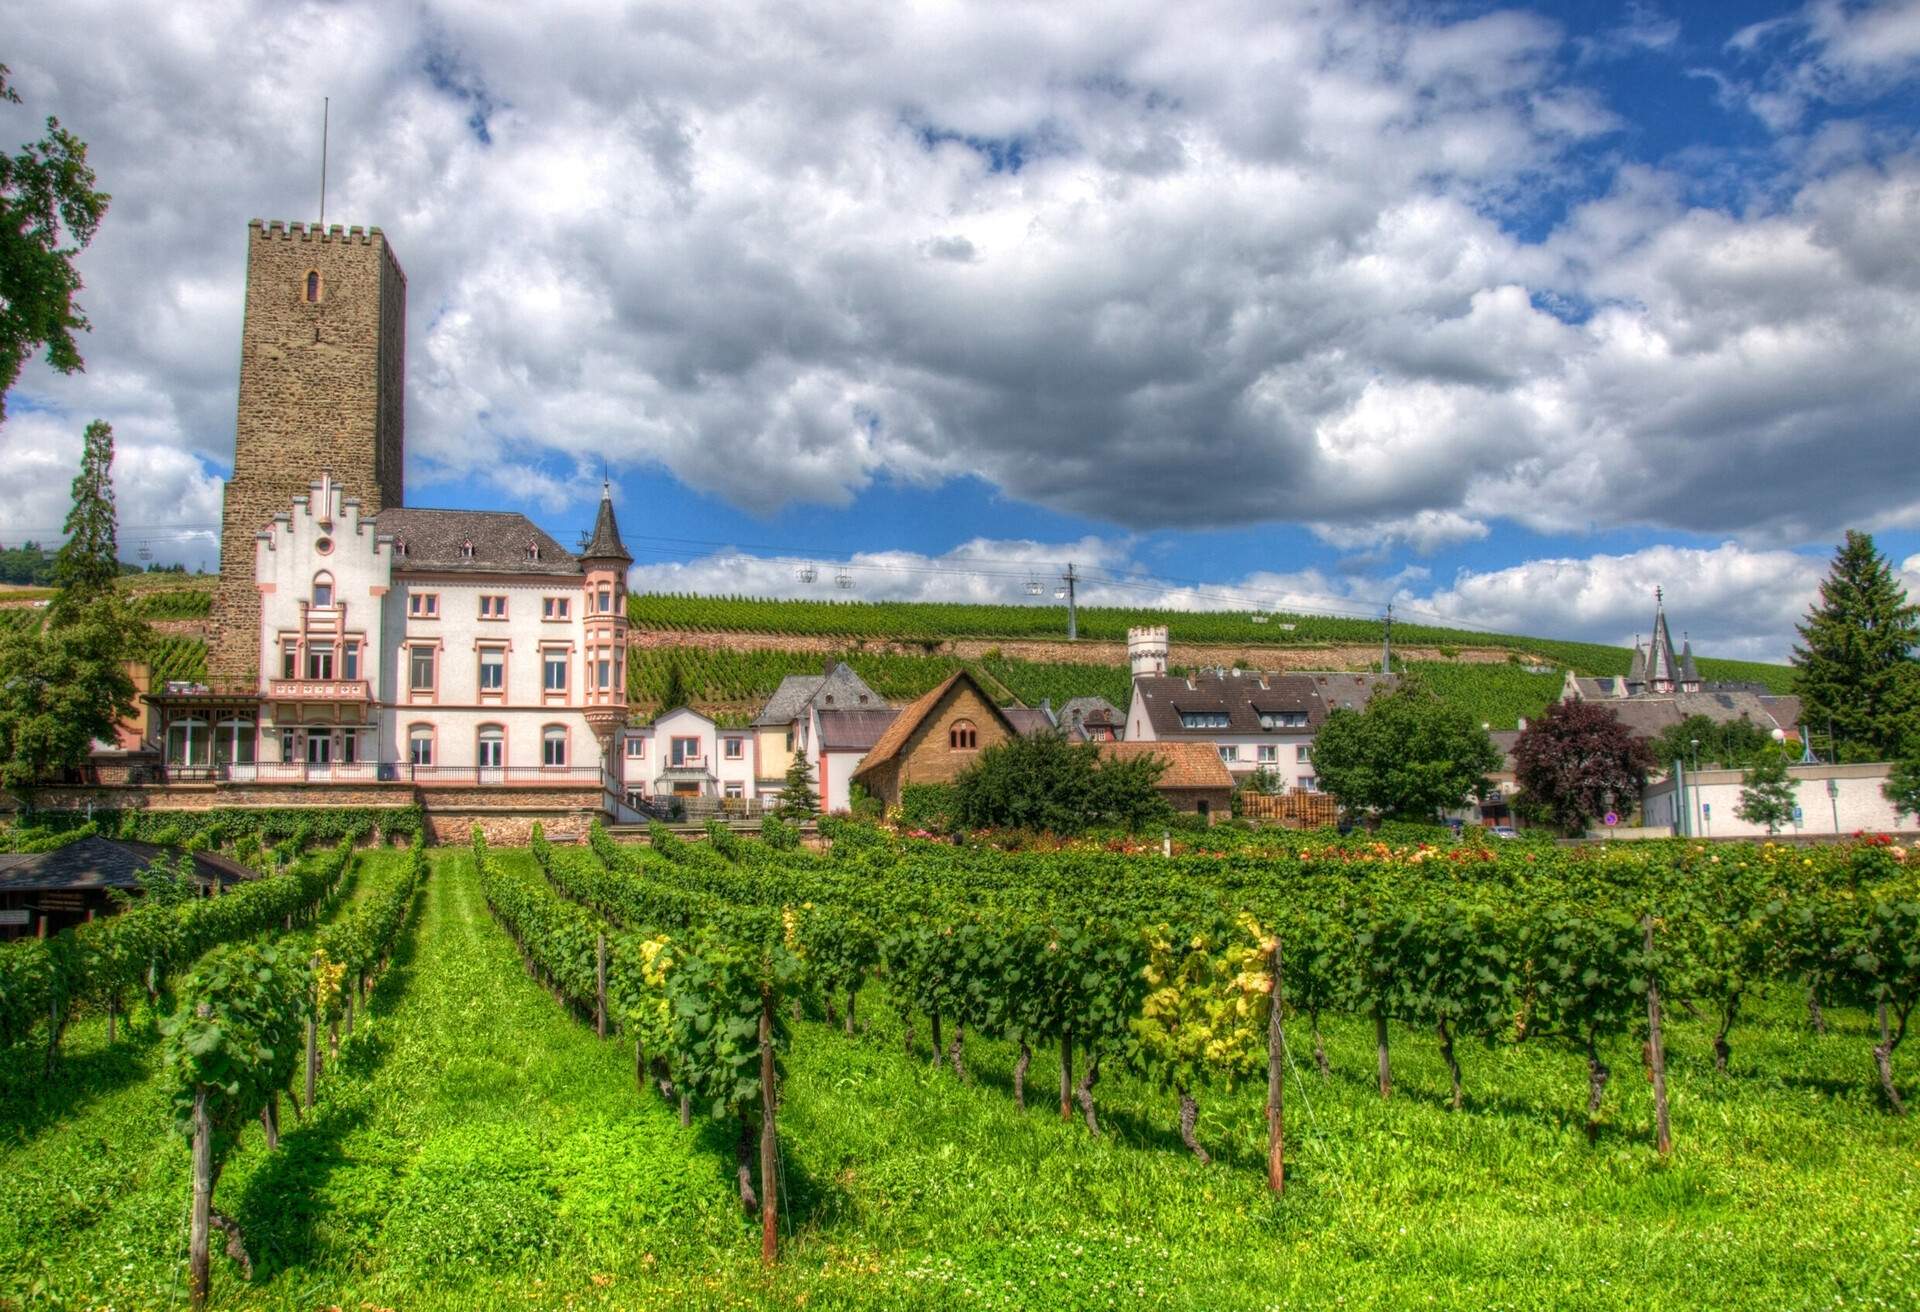 Vineyard near fortress Boosenburg, Ruedelsheim, Hessen, Germany